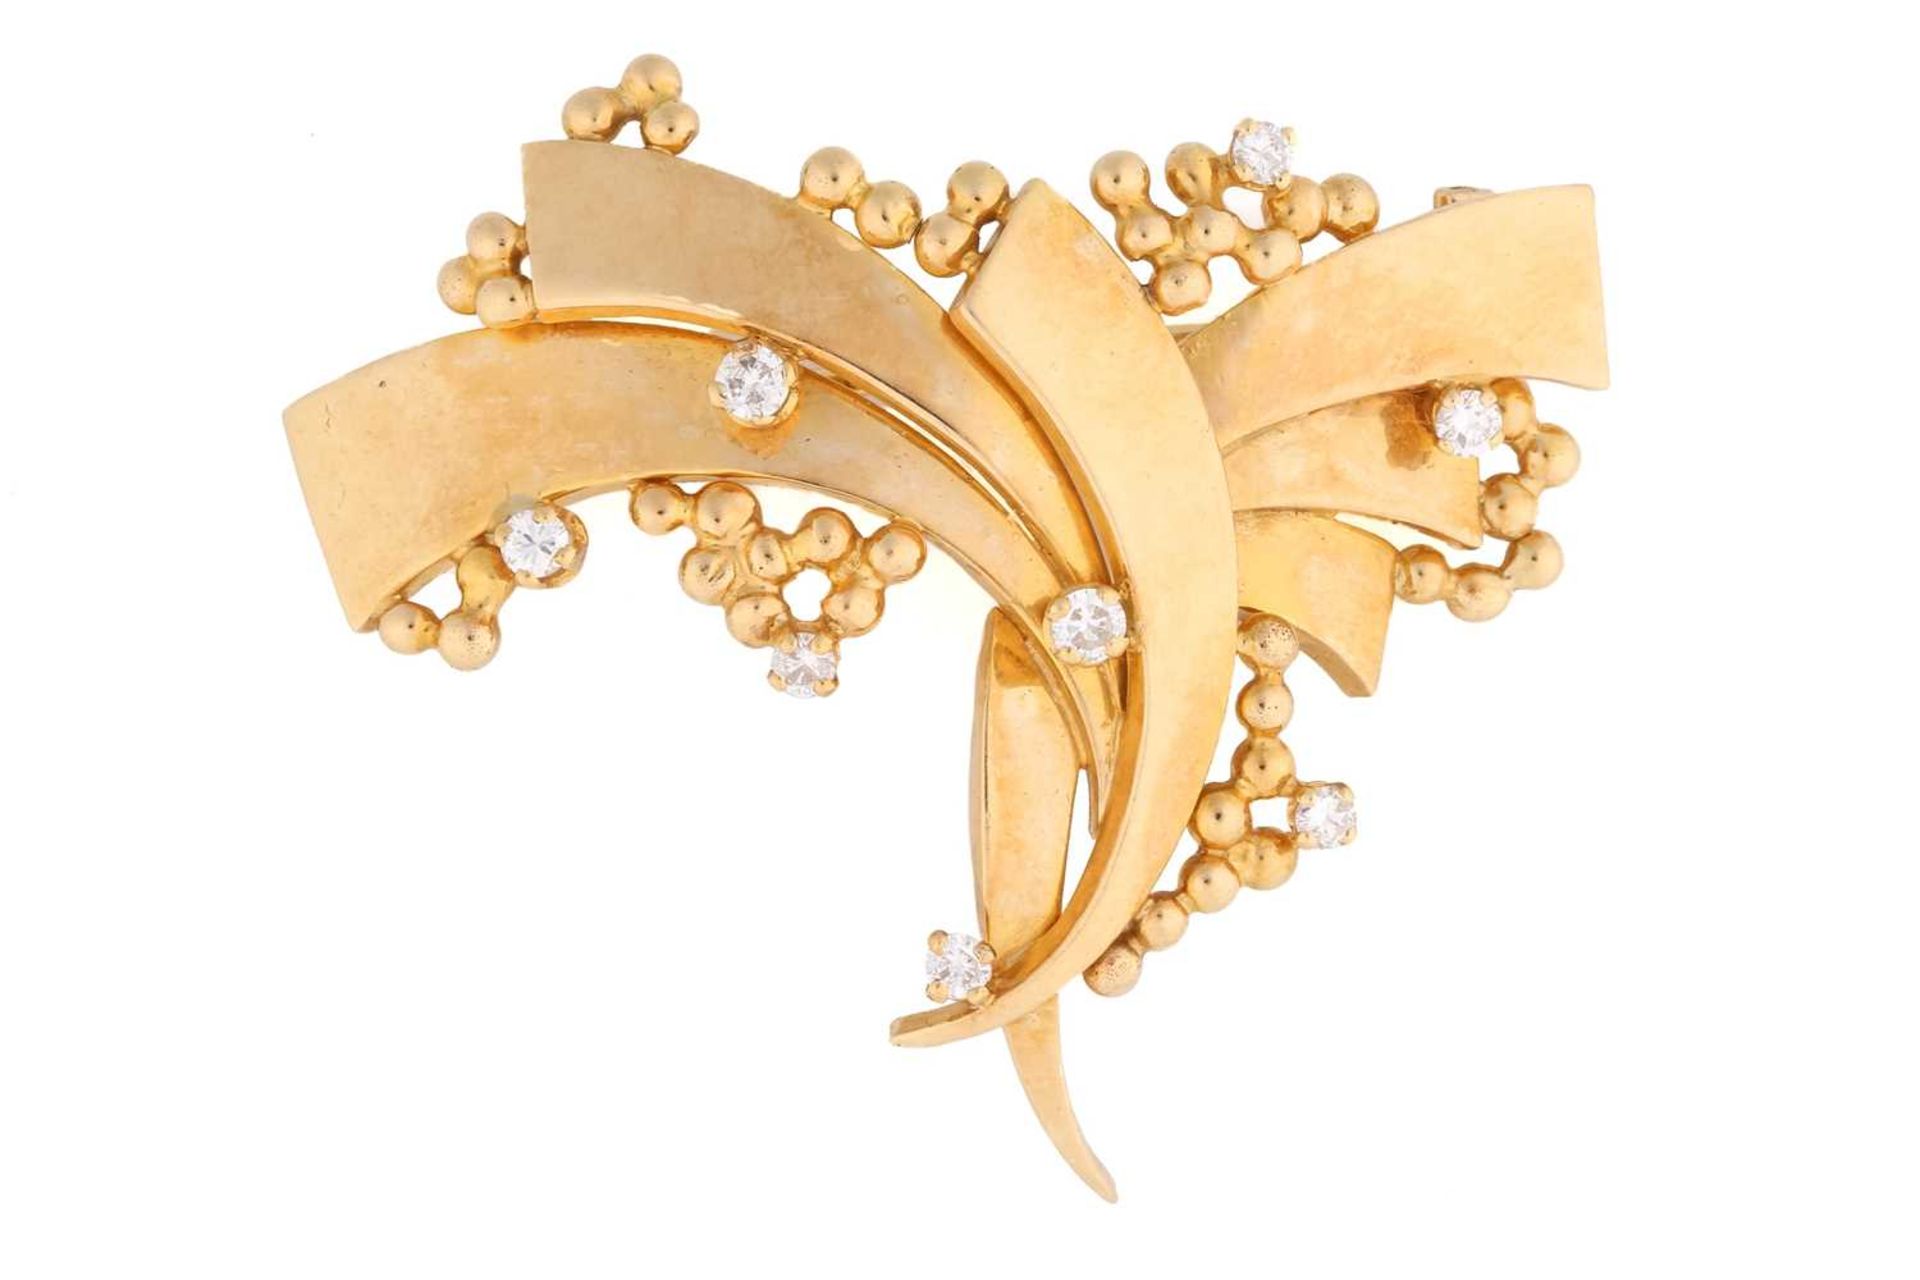 Alan Gard - a Modernist diamond spray brooch in 18ct gold, set with round brilliant cut diamonds